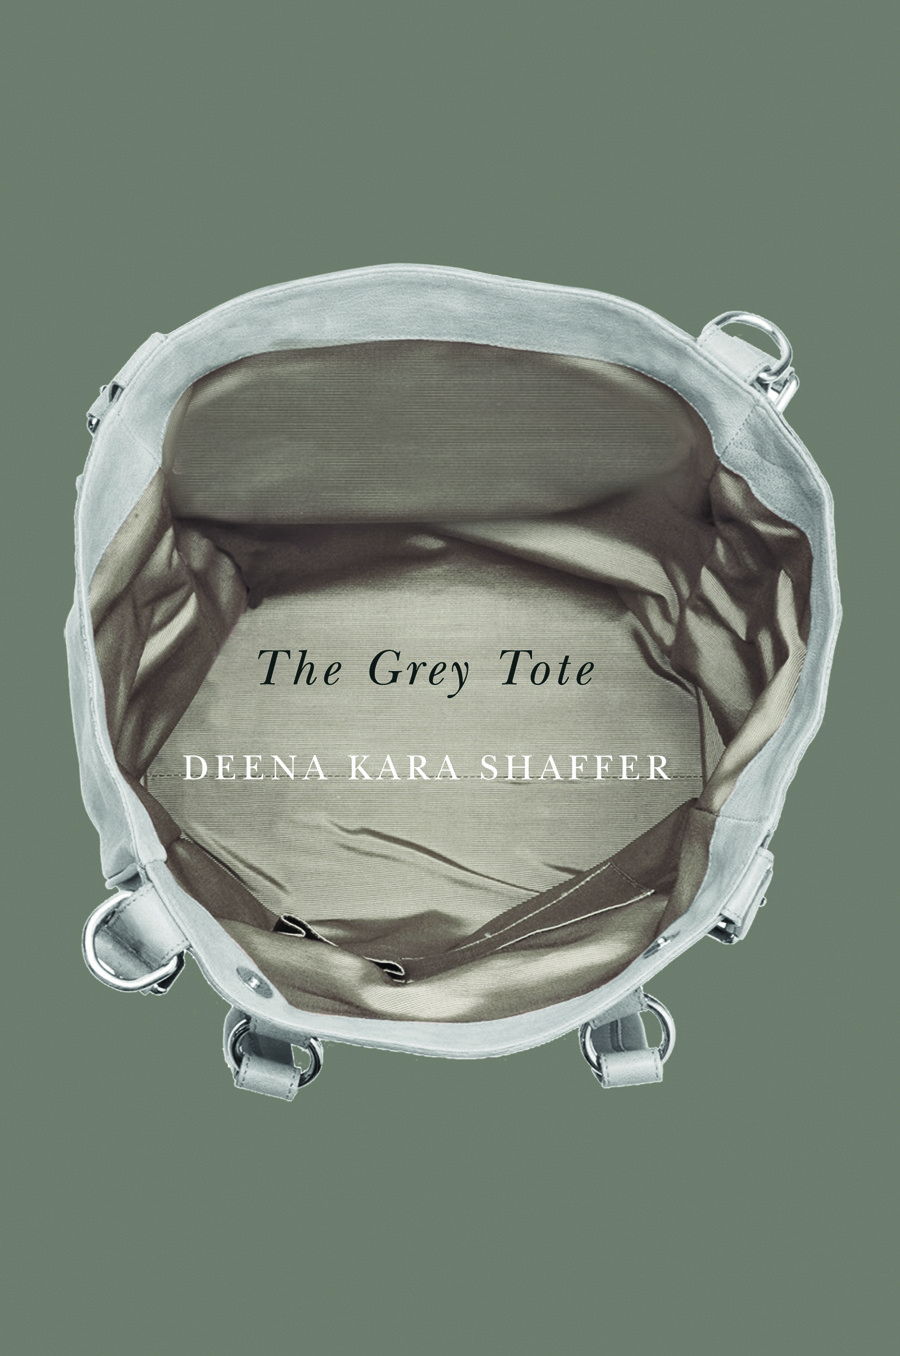 The Grey Tote, by Deena Kara Shaffer